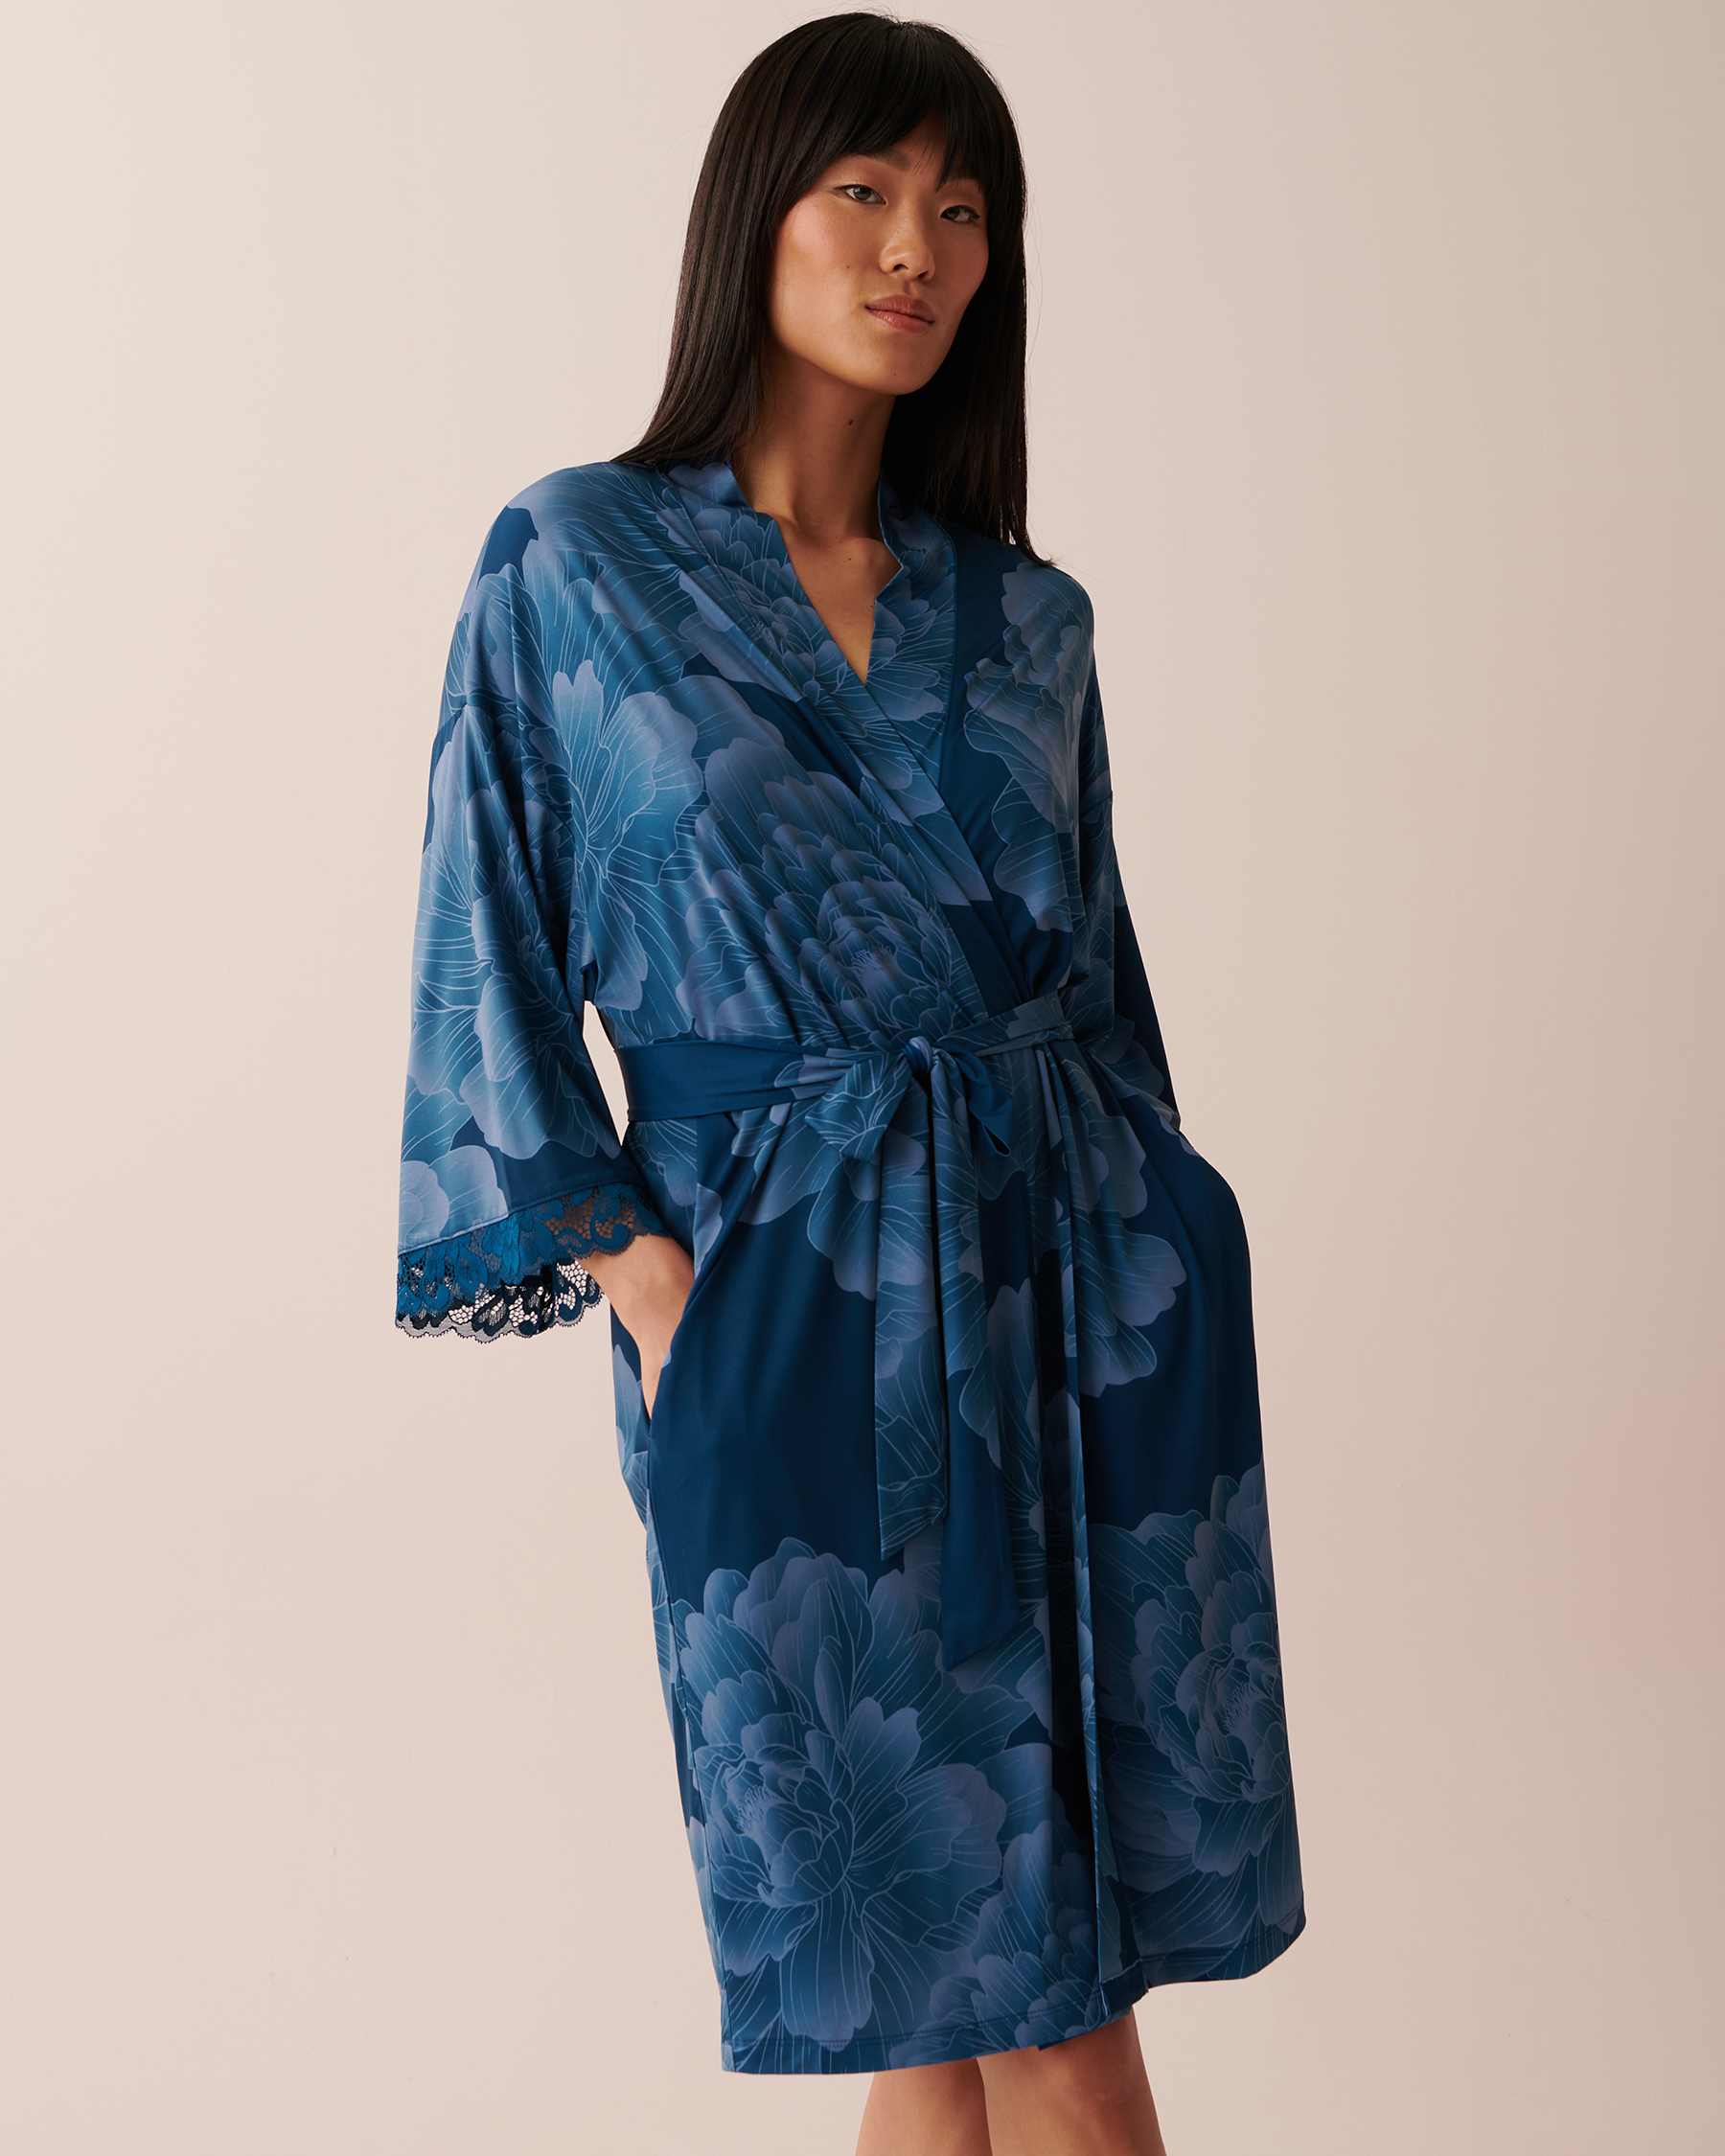 la Vie en Rose Women’s IMMERSIVE PEONY Recycled Fibers Lace Trim Kimono